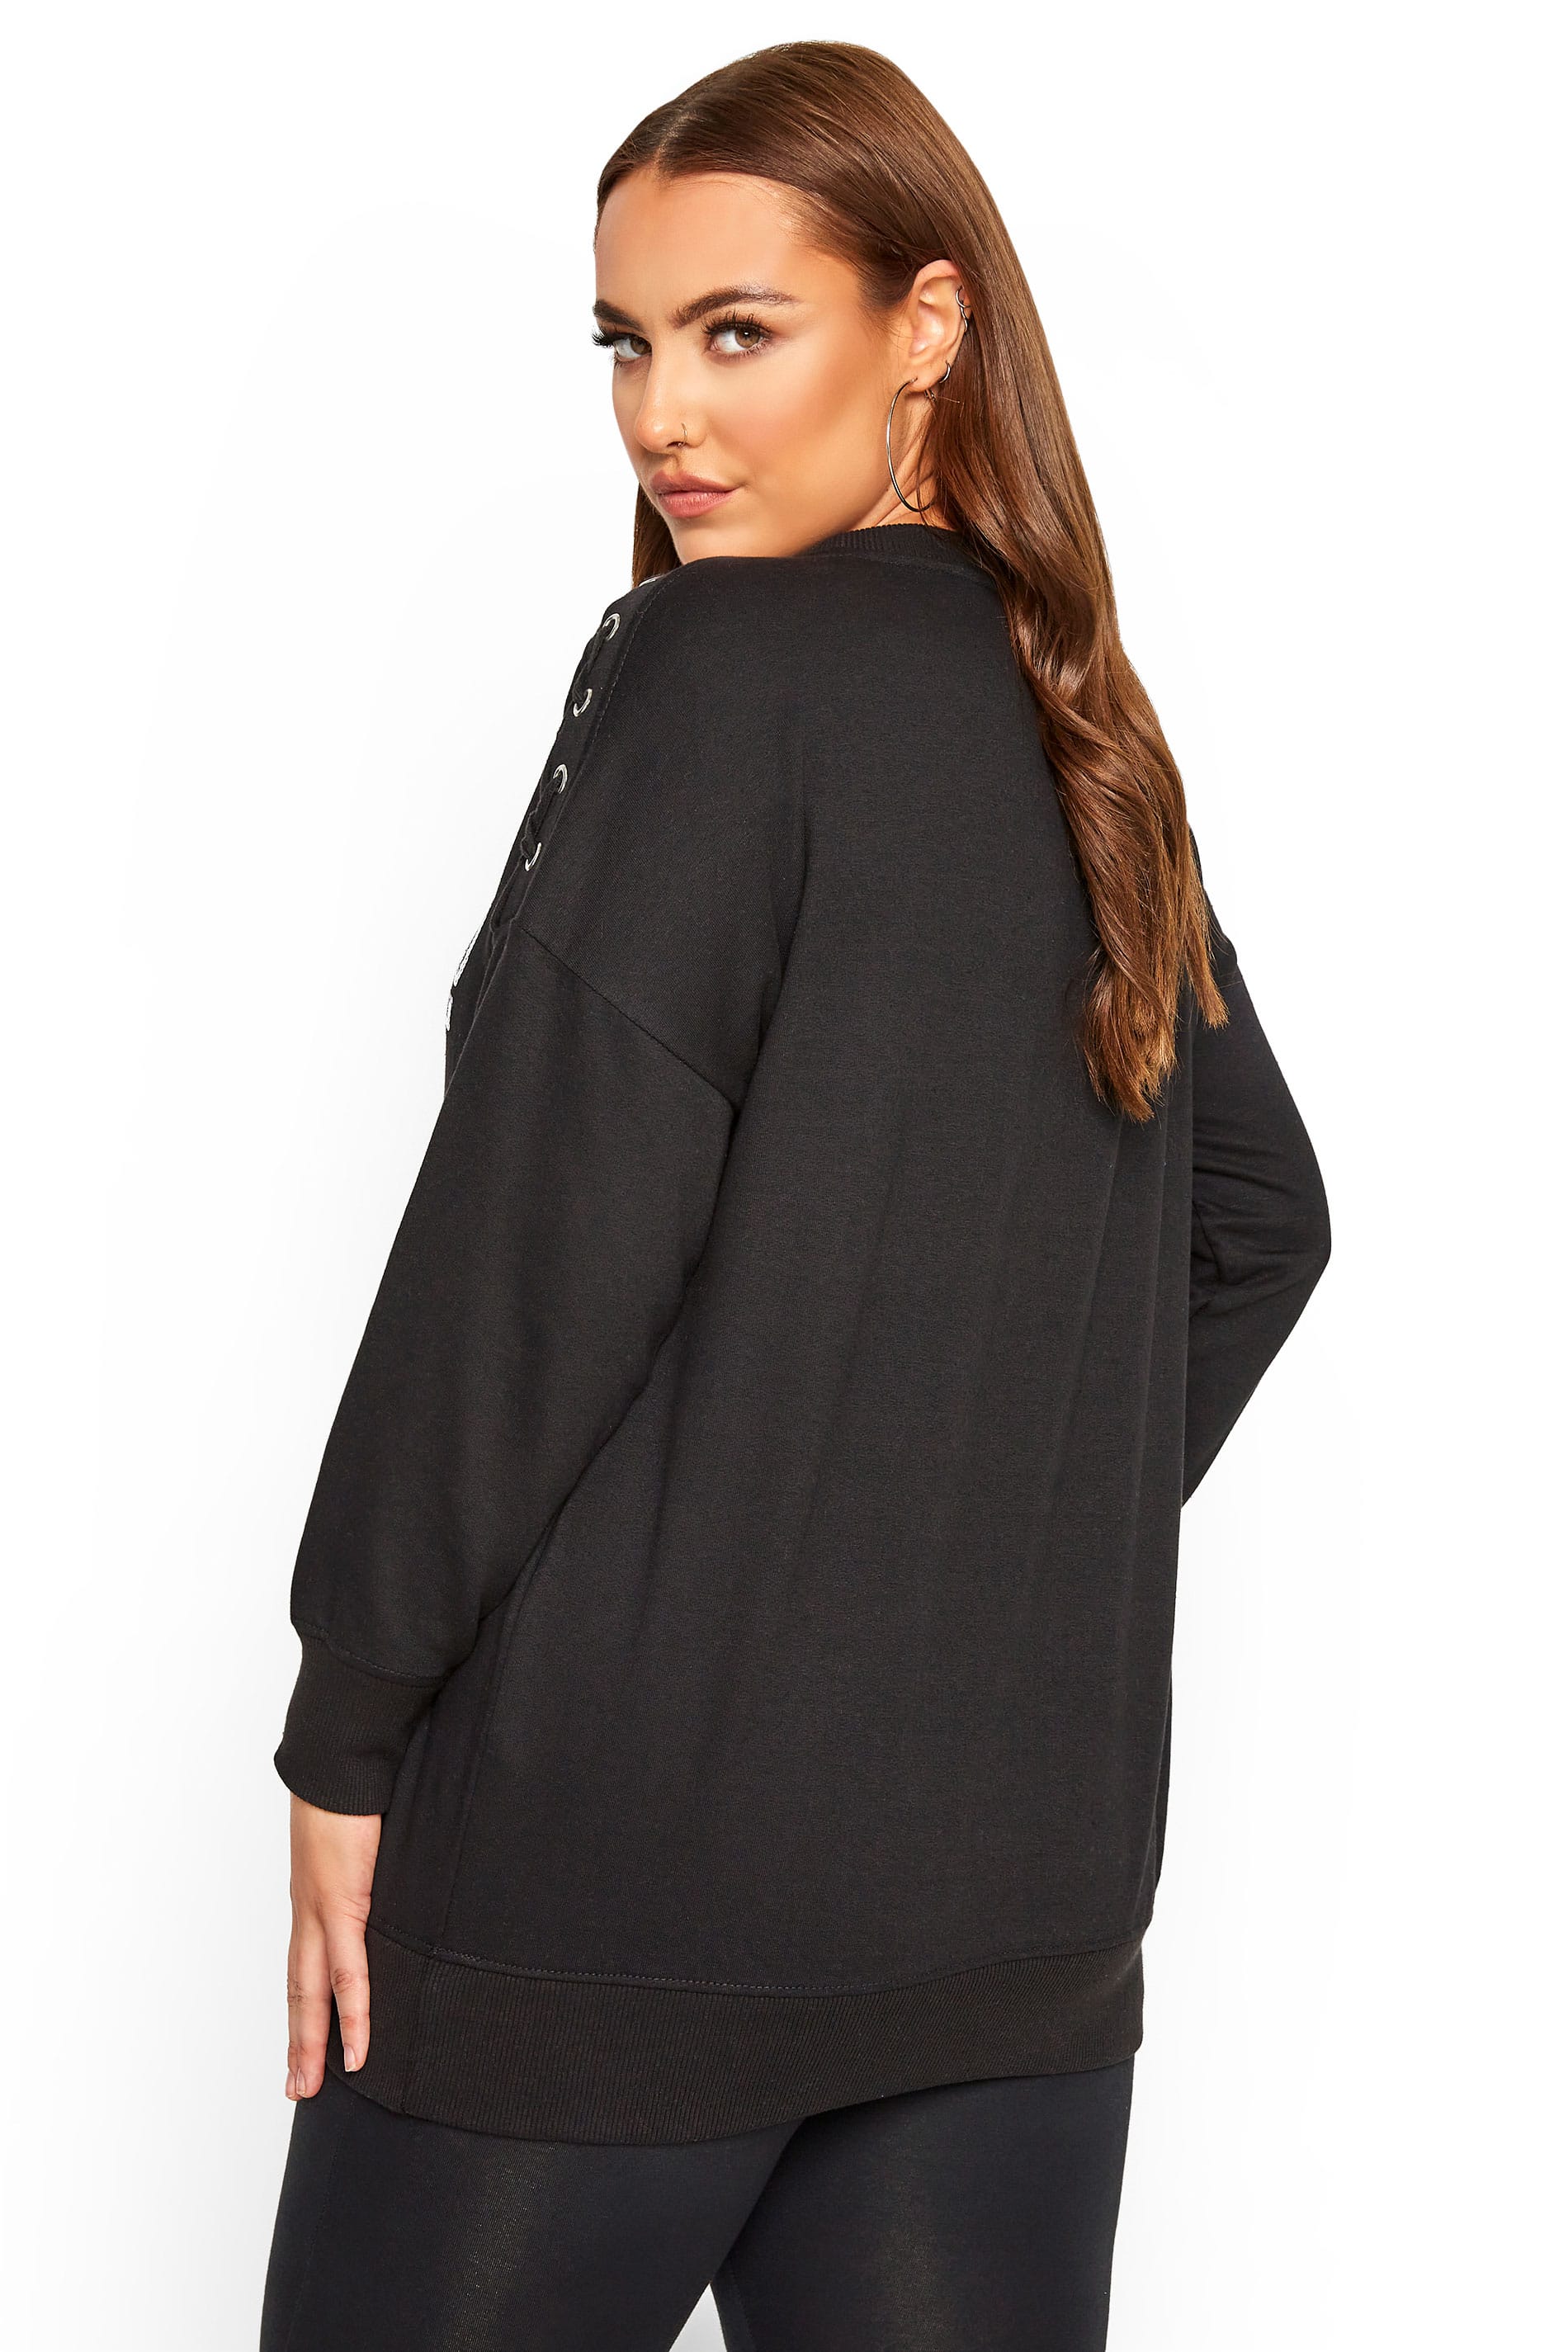 Black Sequin 'Ciao' Sweatshirt | Yours Clothing